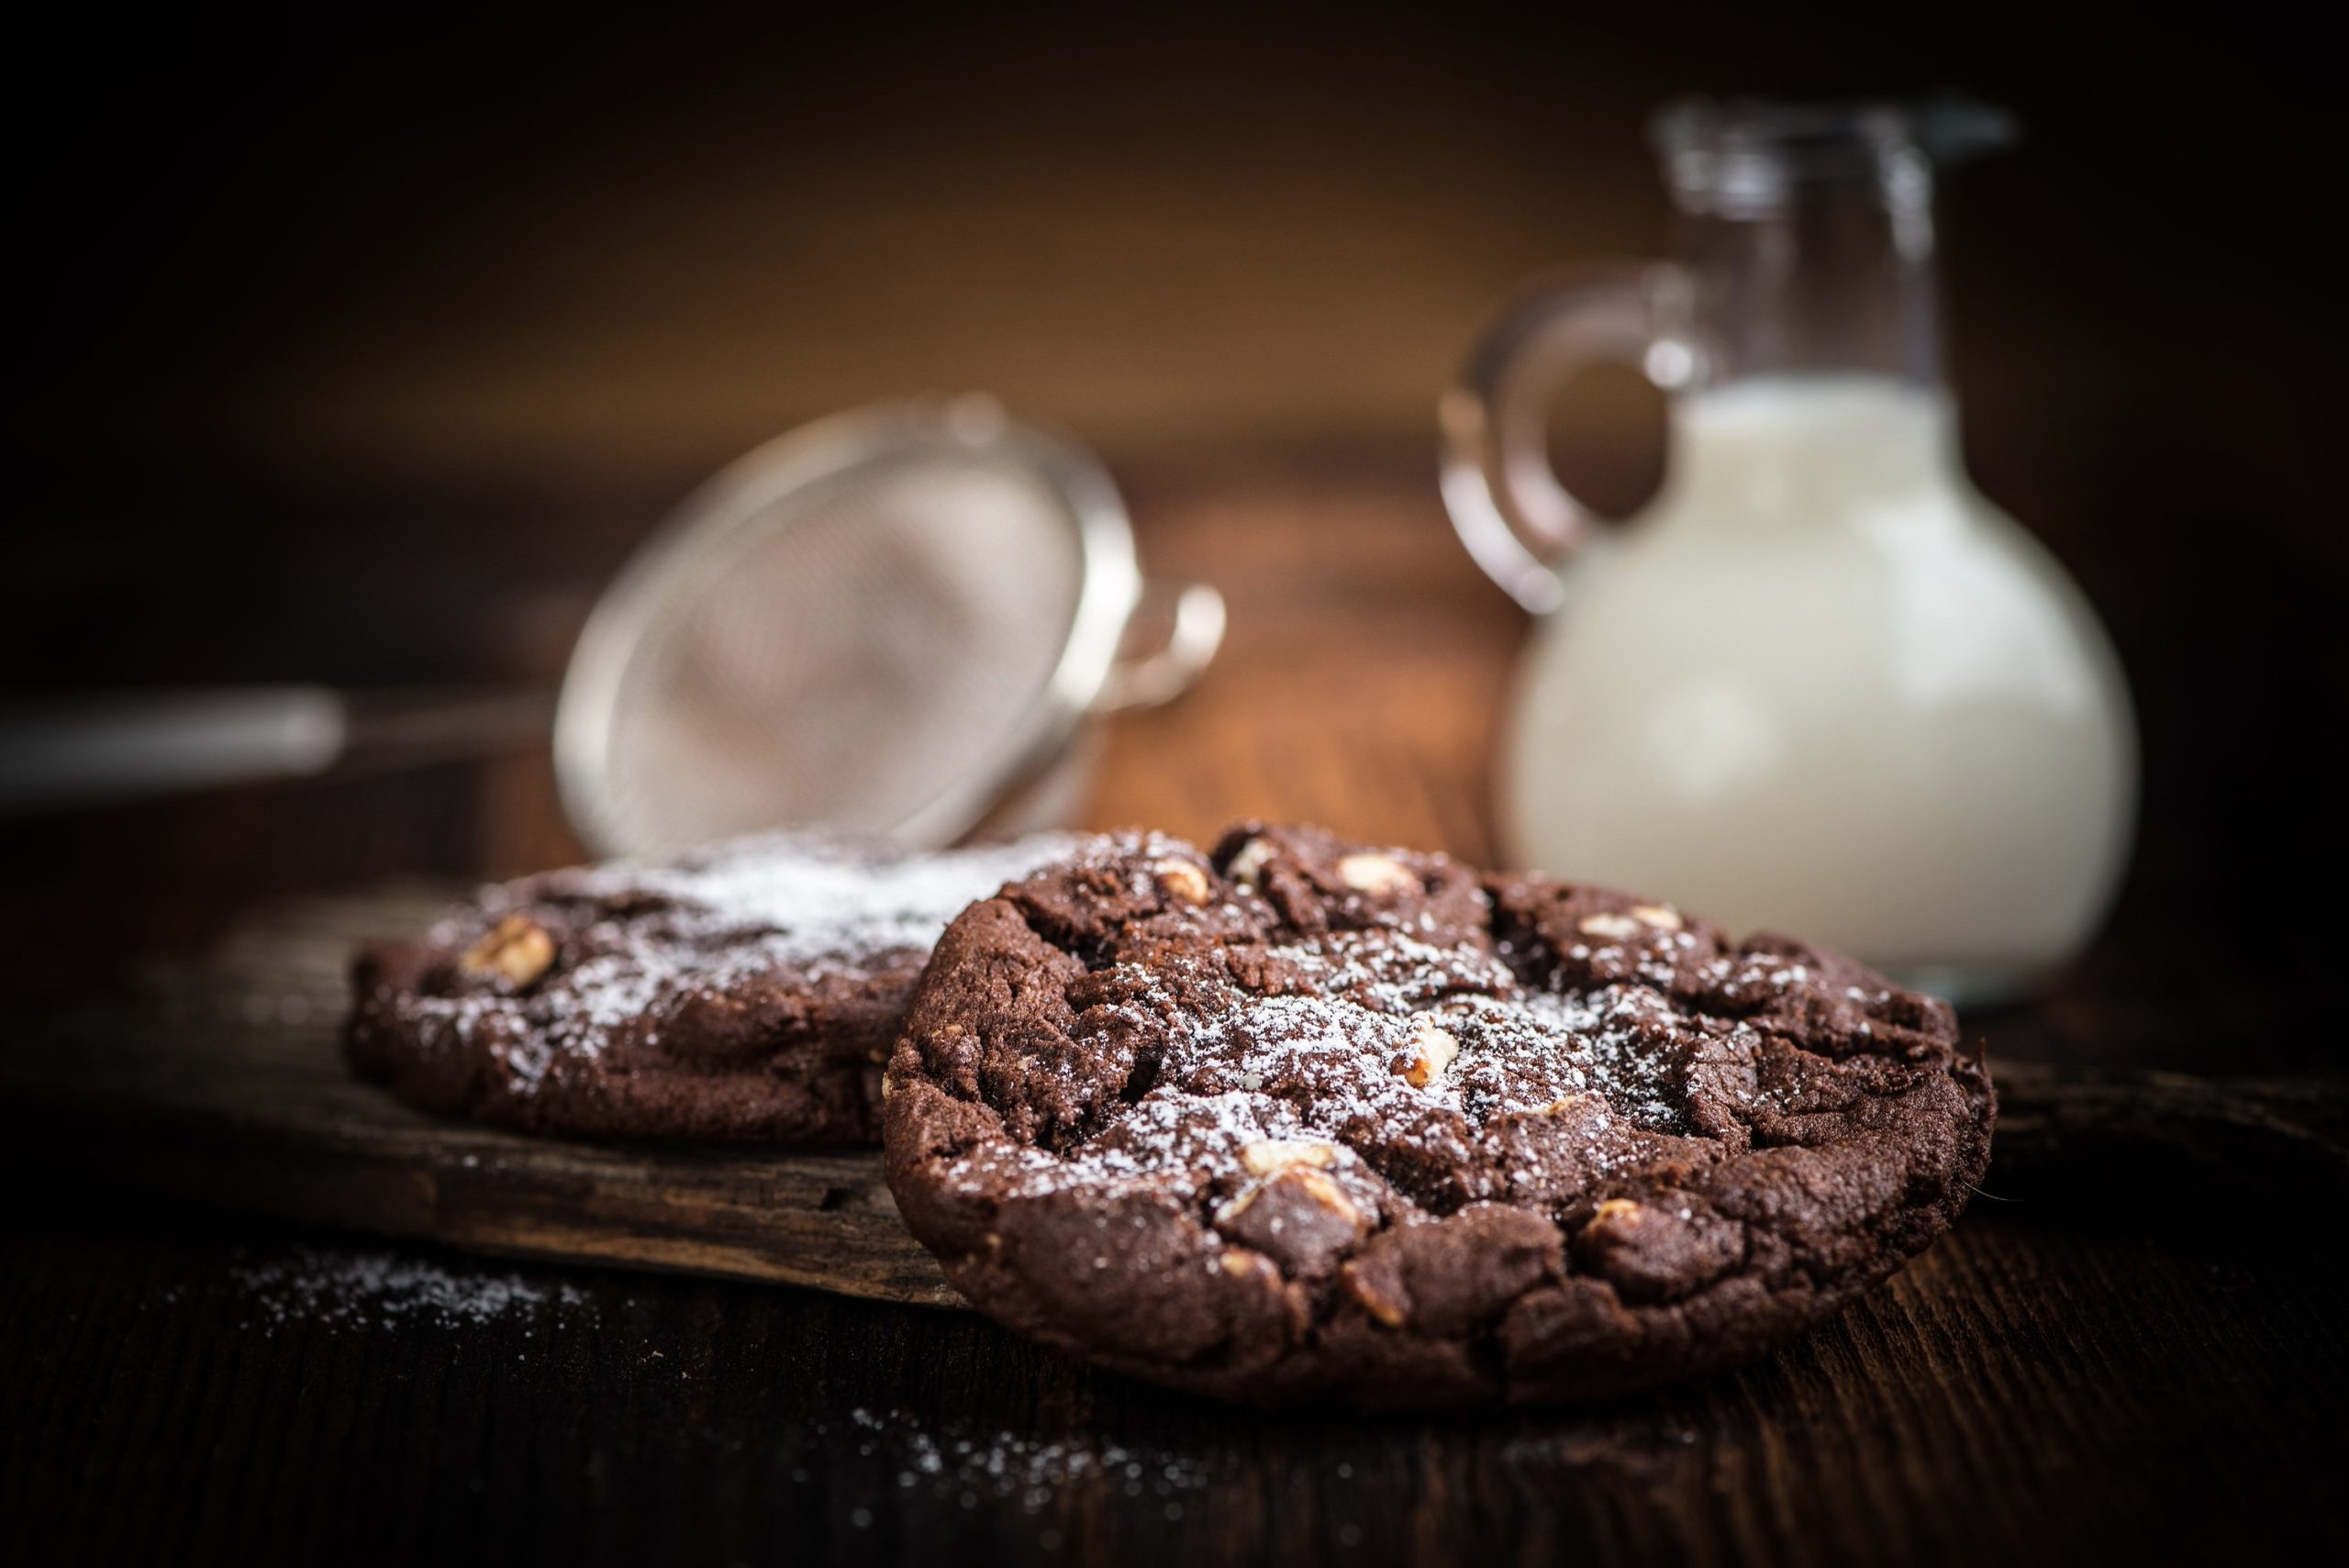 Double chocolate cookies - yum